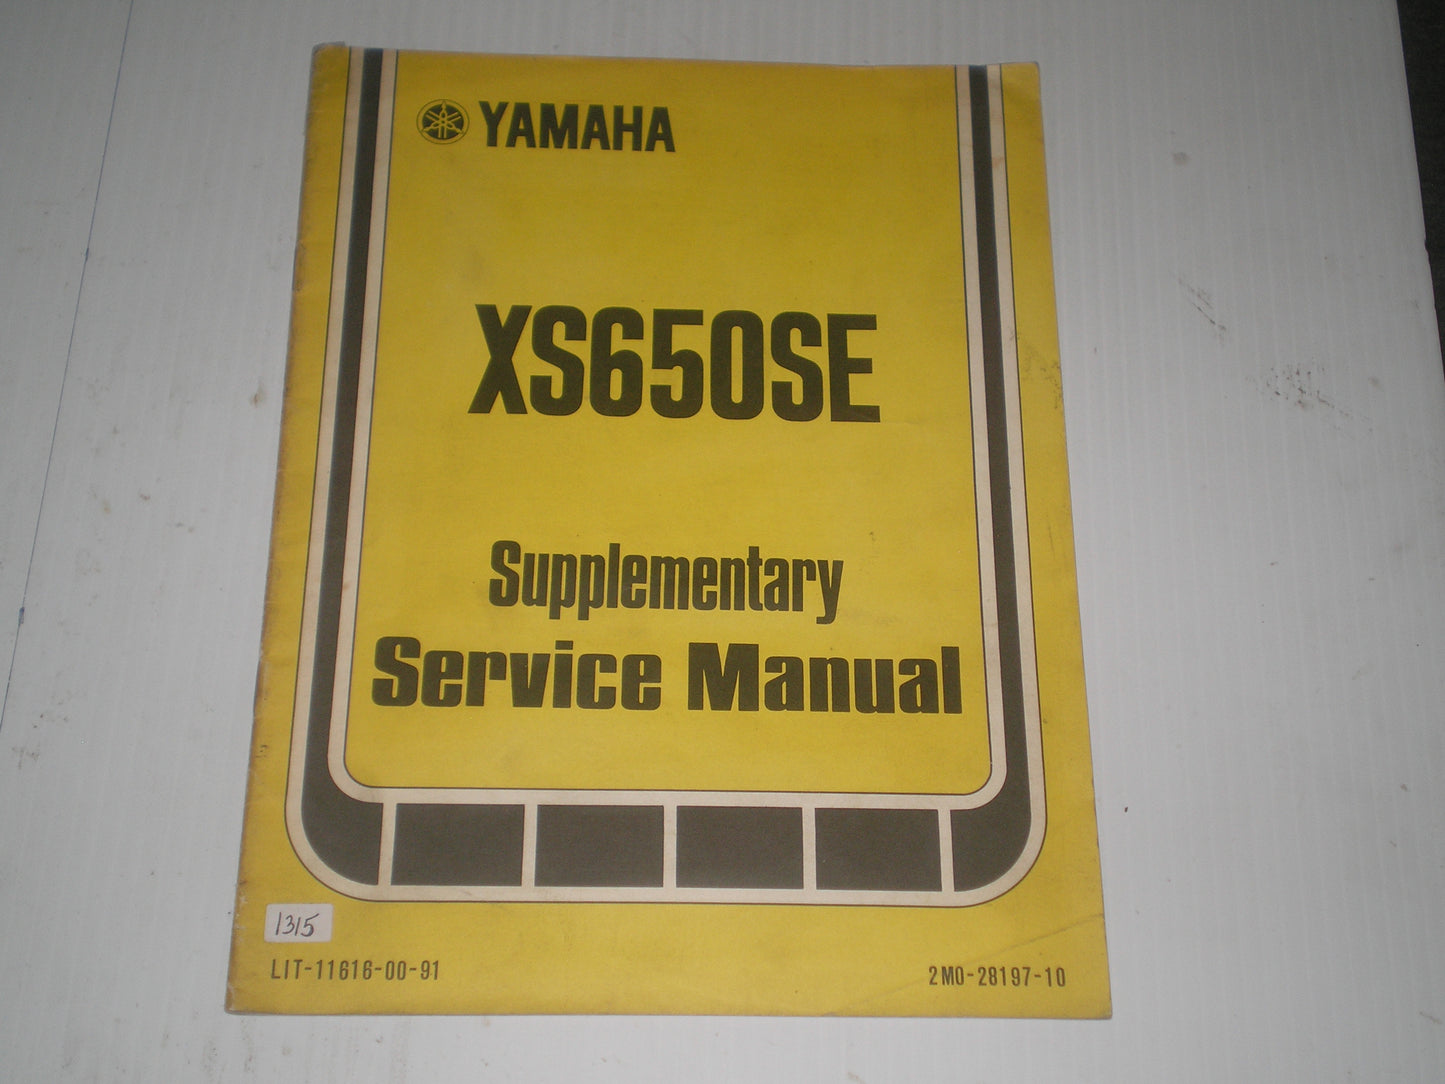 YAMAHA XS650 SE  XS650S E  1978  Service Manual Supplement  2M0-28197-10  LIT-11616-00-91   #1315